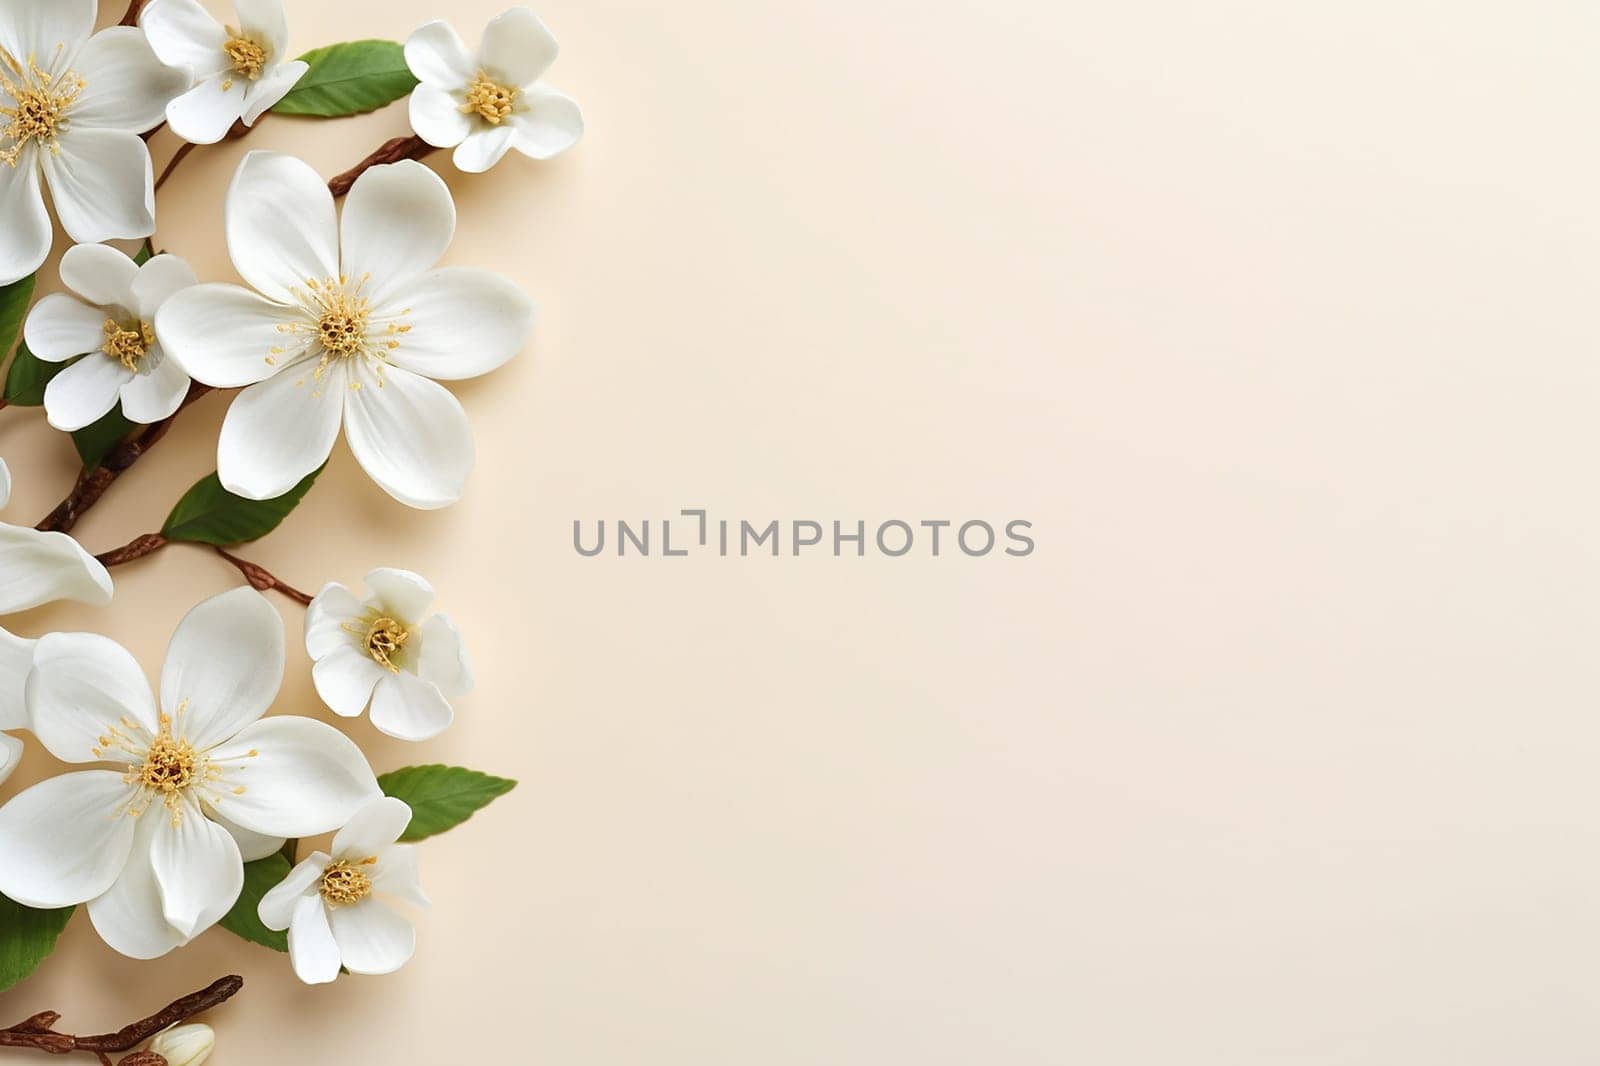 Elegant white flowers arranged on a beige background.